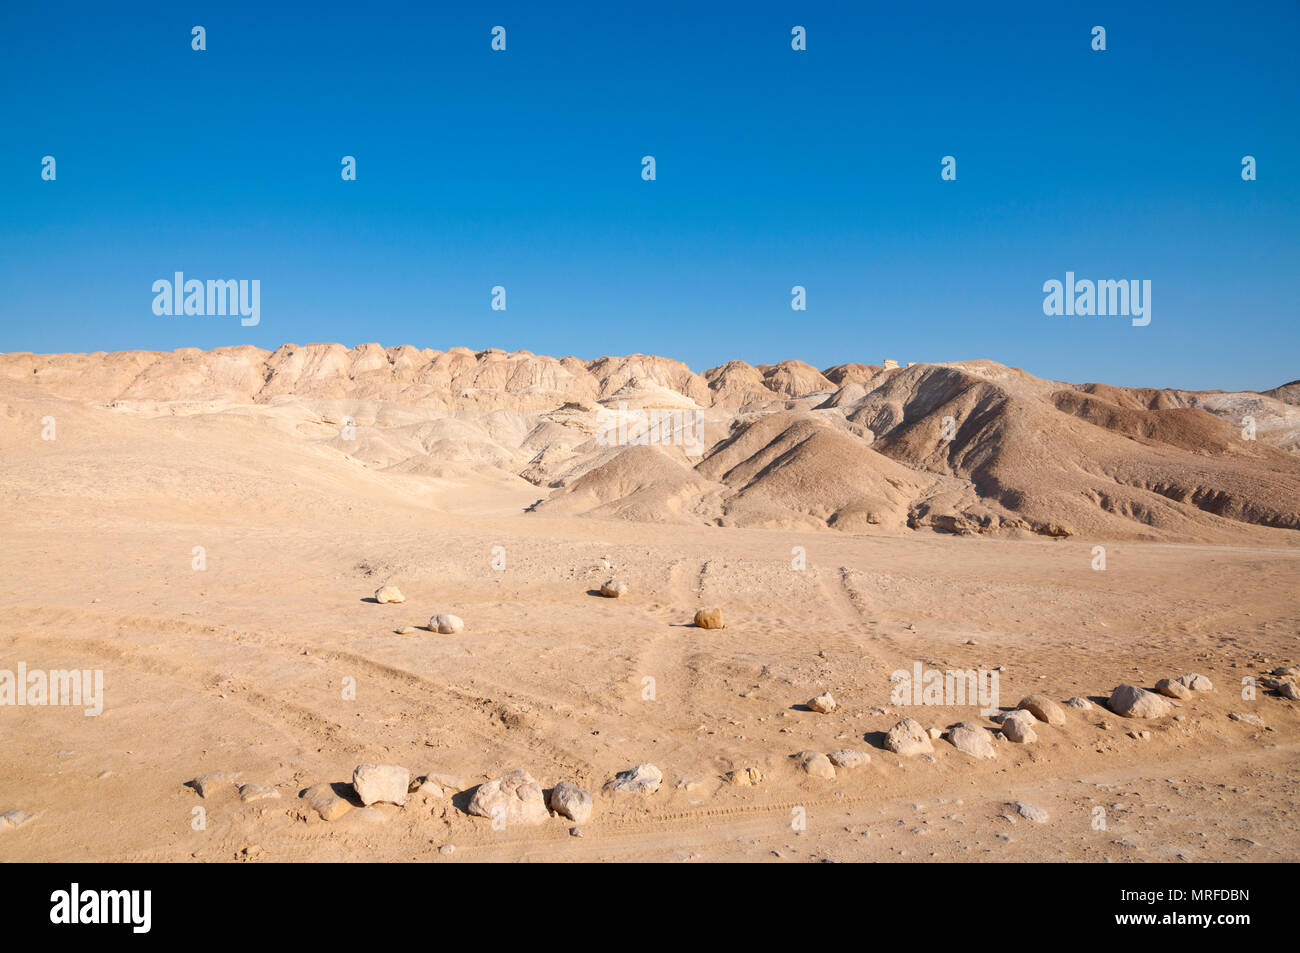 the Judea desert and Dead Sea area Stock Photo